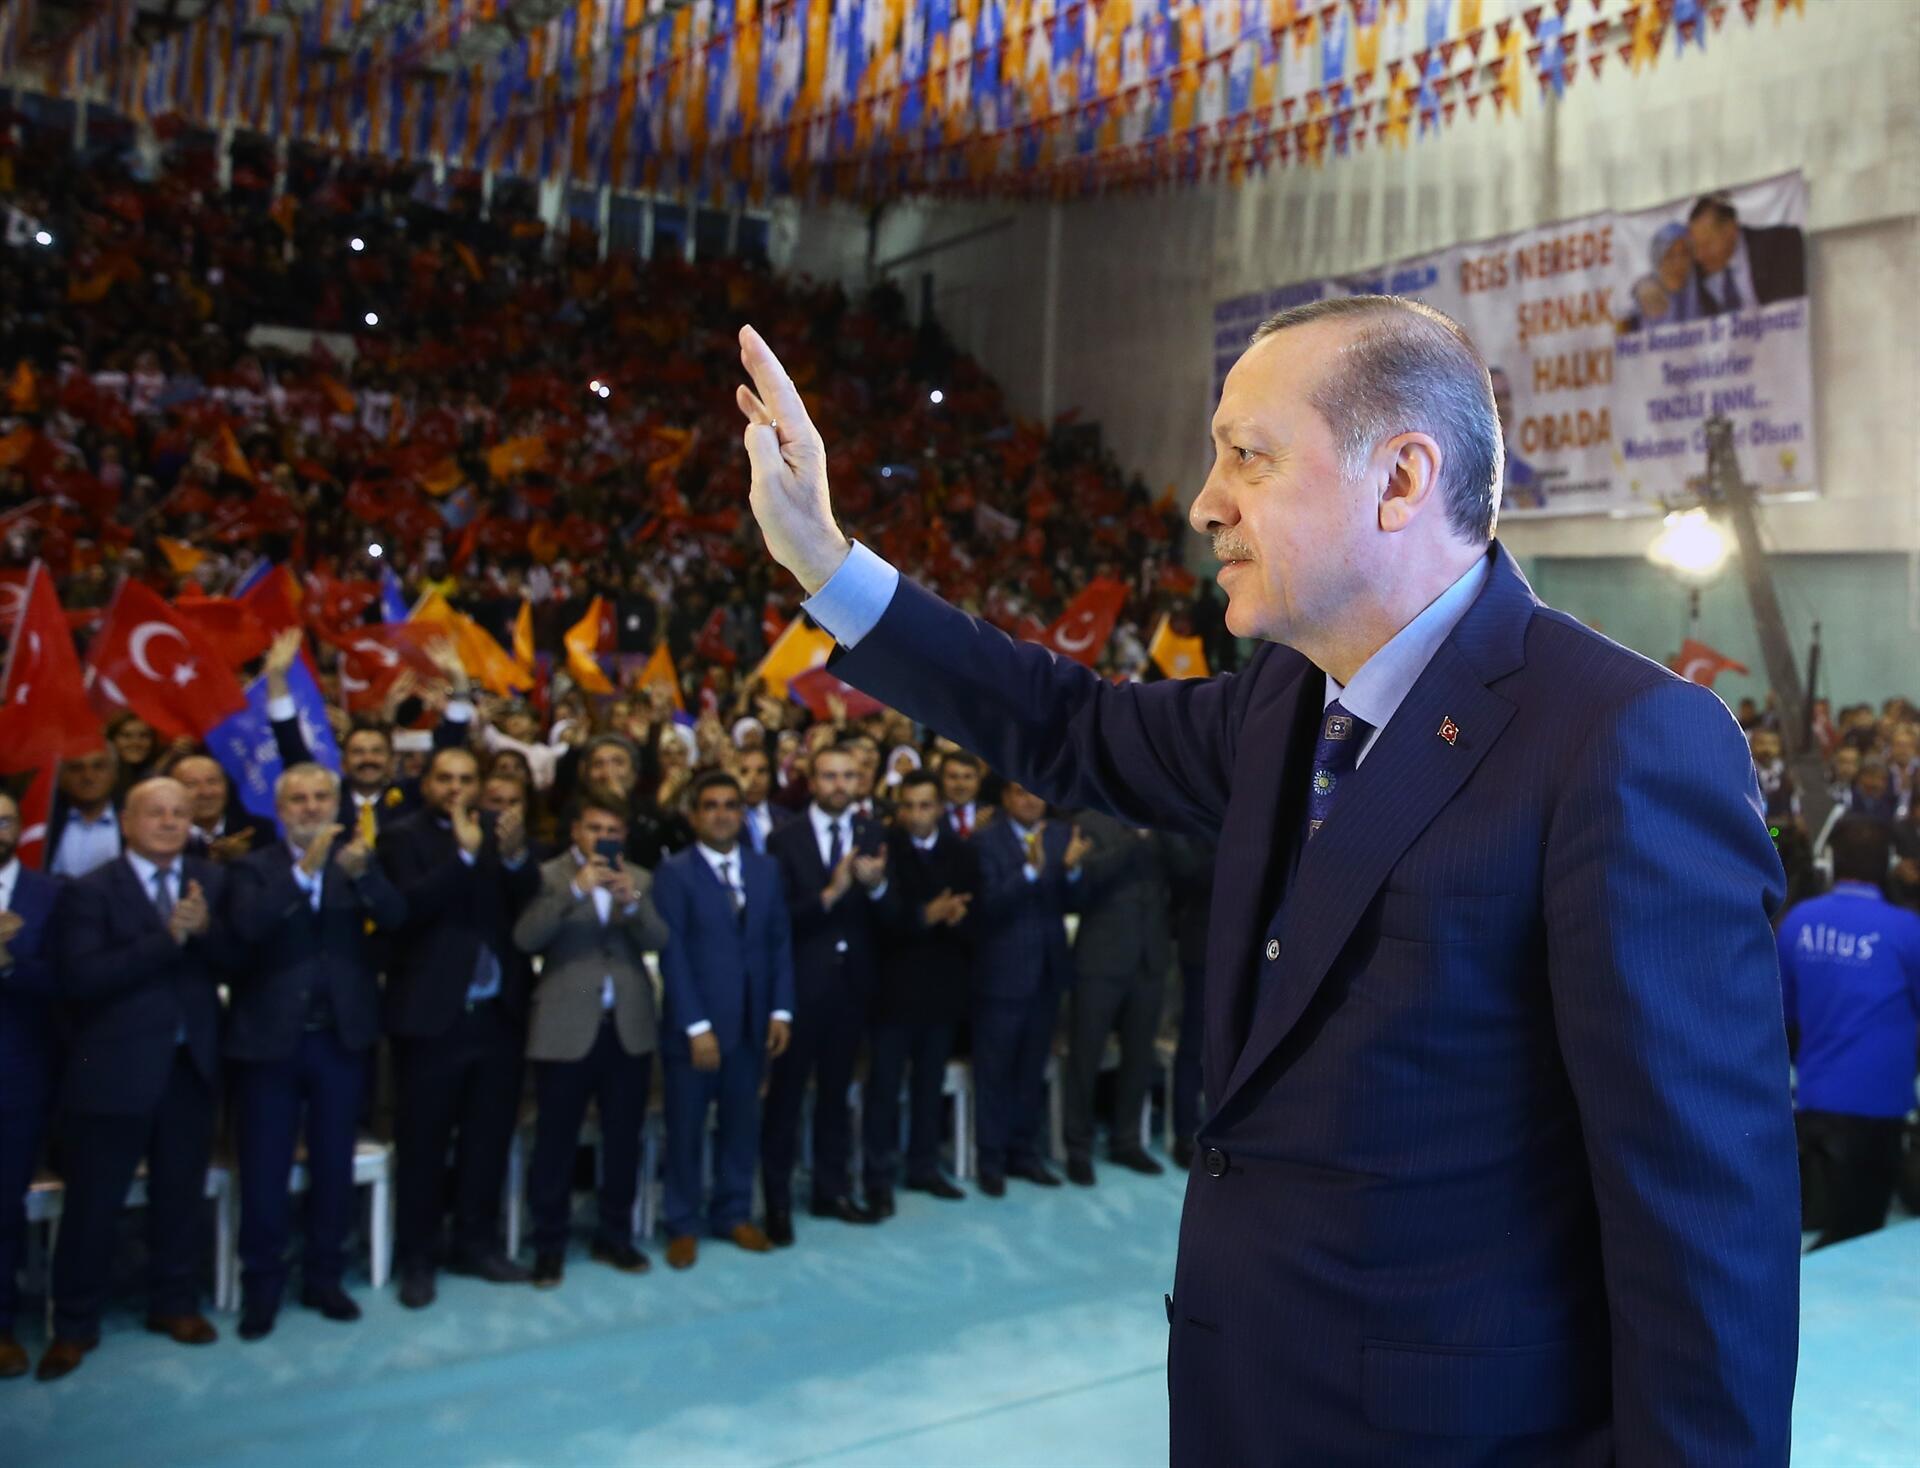 Erdoğan calls on US to correct its mistake on Jerusalem after UN vote